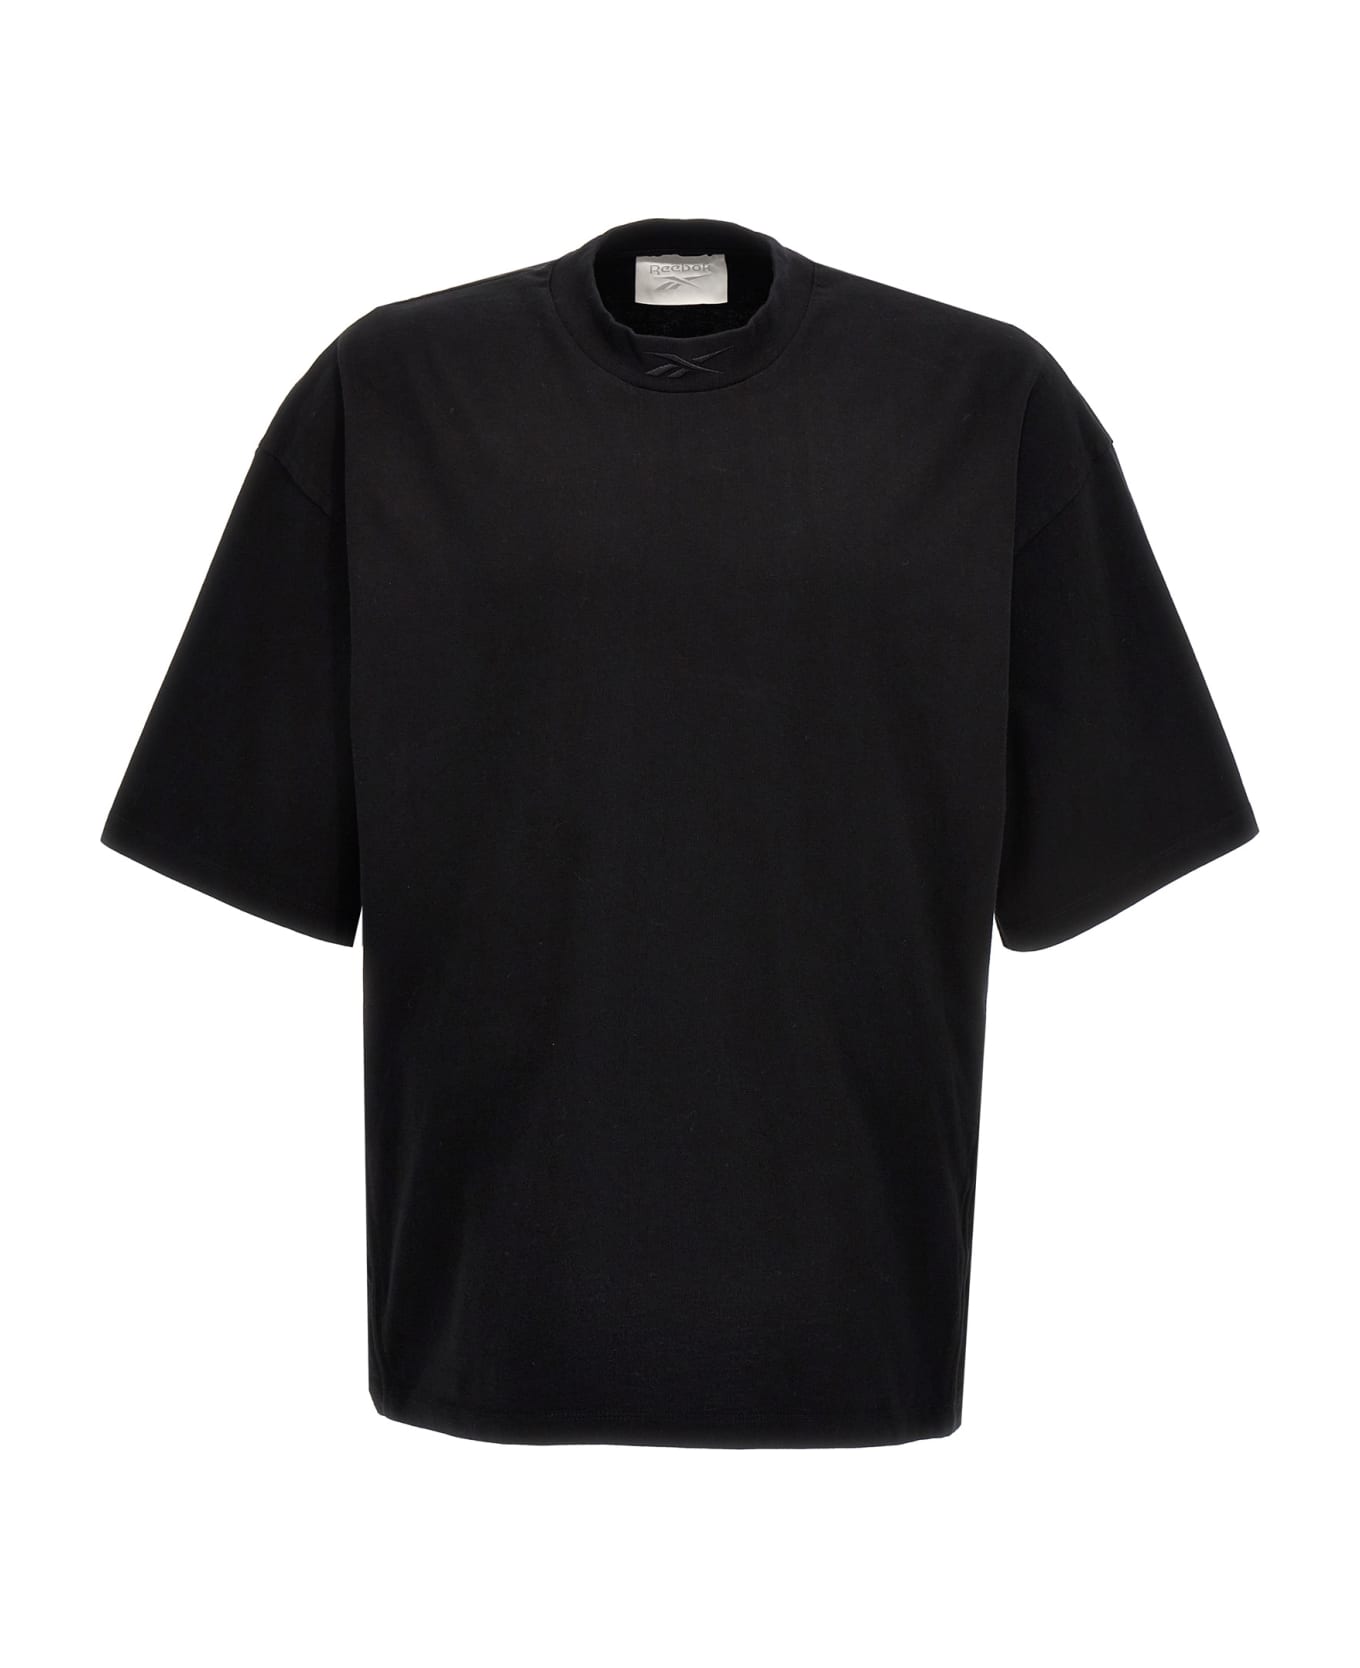 Reebok Logo Embroidery T-shirt - Black  